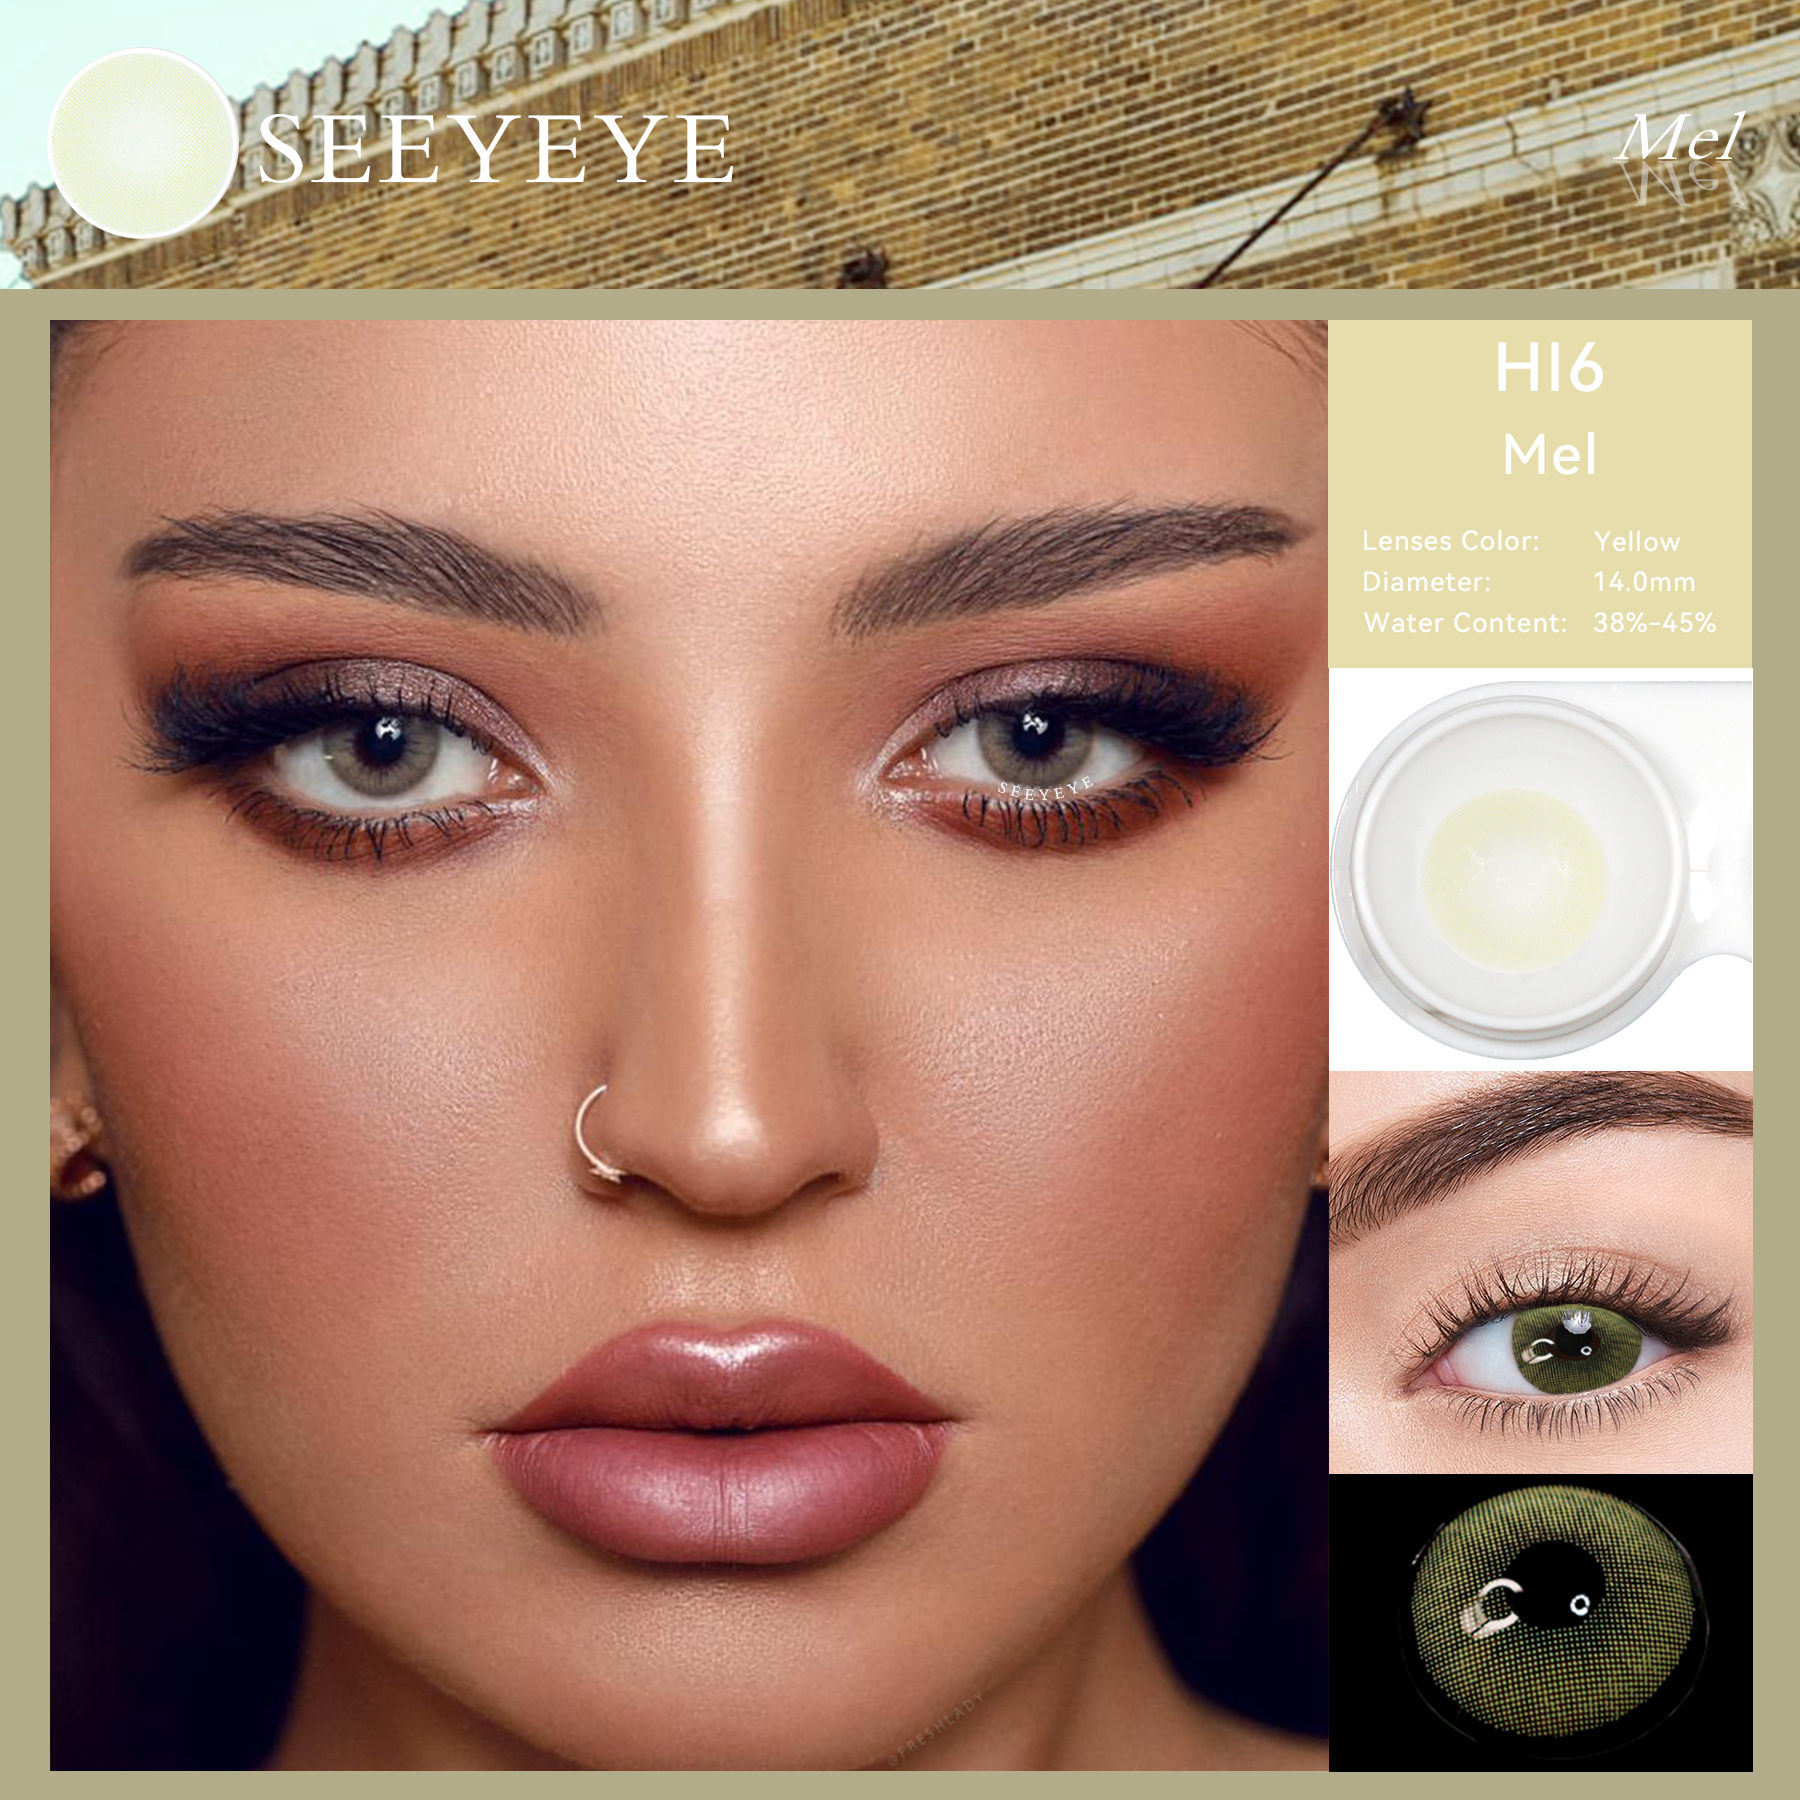 Seeyeye Hi Series ທໍາມະຊາດຊອກຫາເຄື່ອງສໍາອາງຈີນຂາຍຍົກສີ Contact Lens ລາຄາຖືກ Soft Yearly Eye Colored Contact Lens